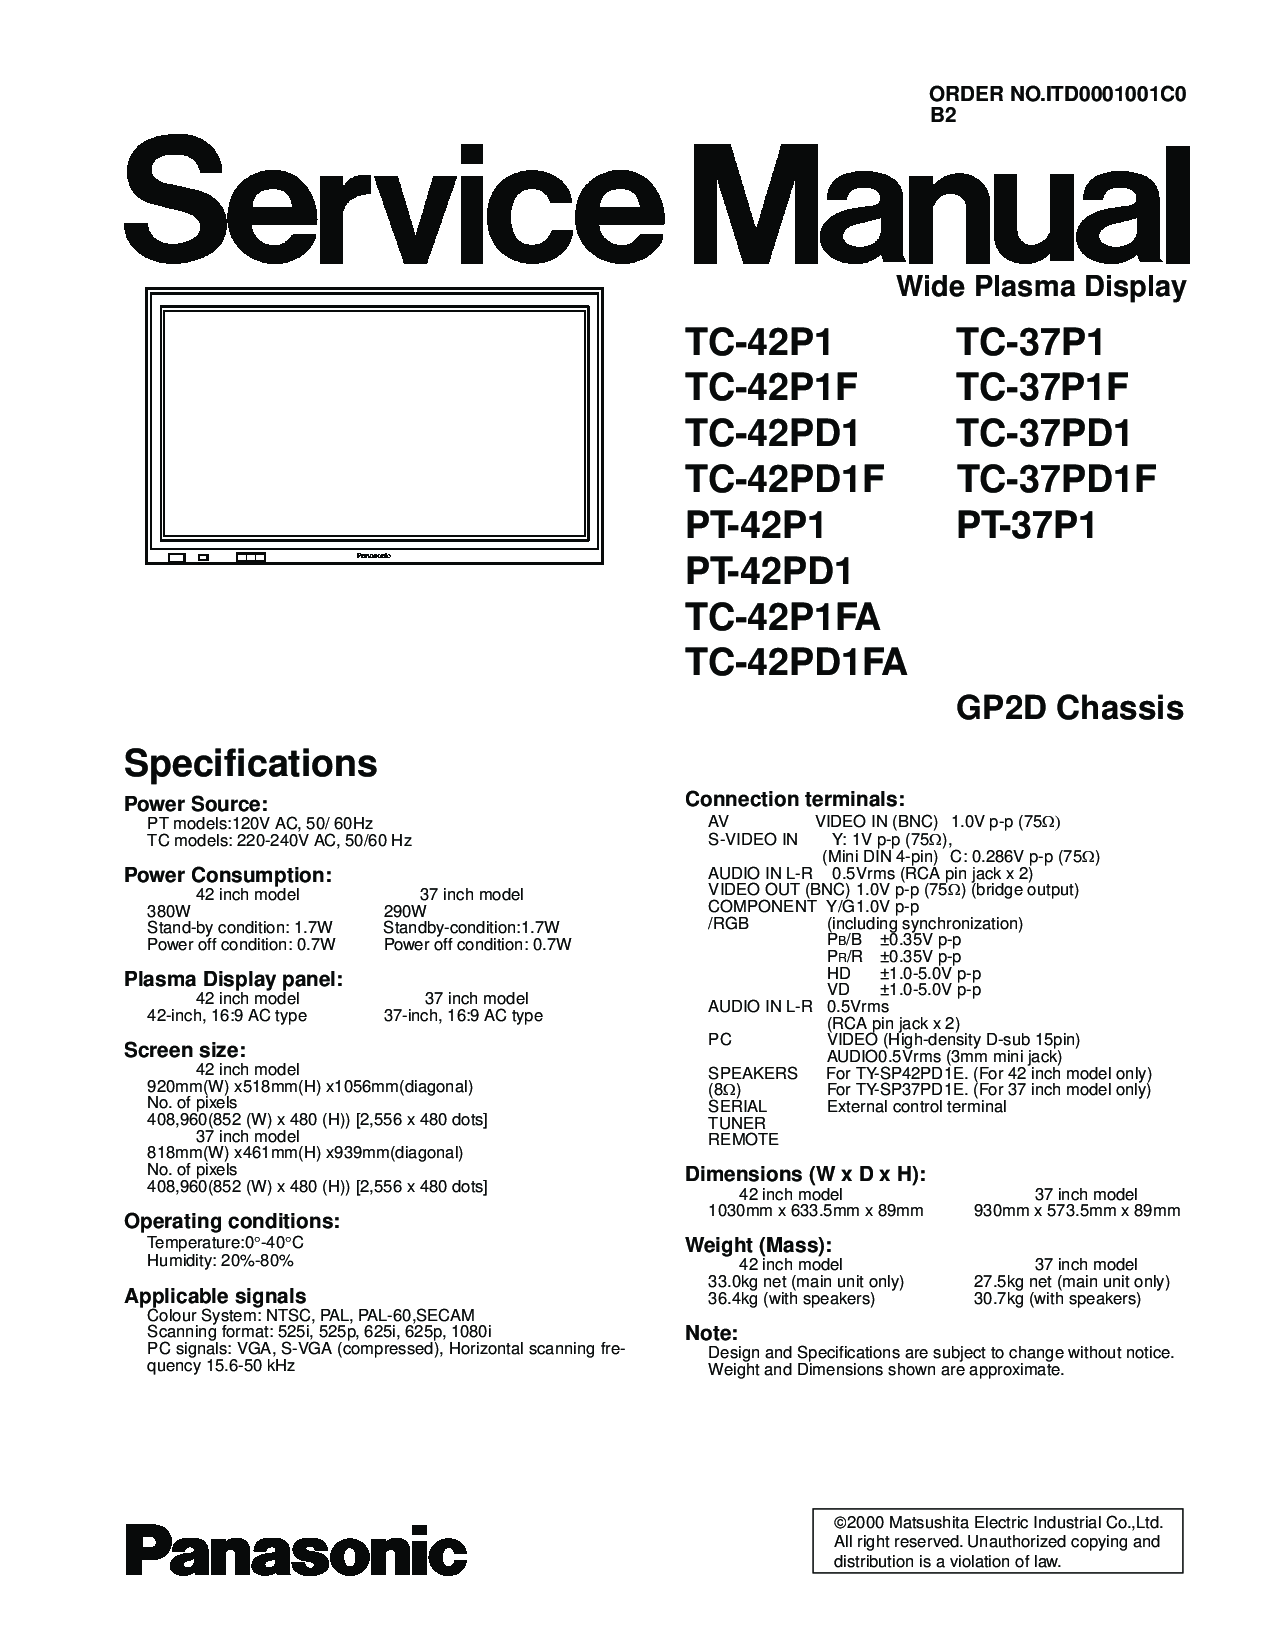 Panasonic TC-42P1, TC-42P1F, TC-42PD1, TC-42PD1F, PT-42P1 Service manual